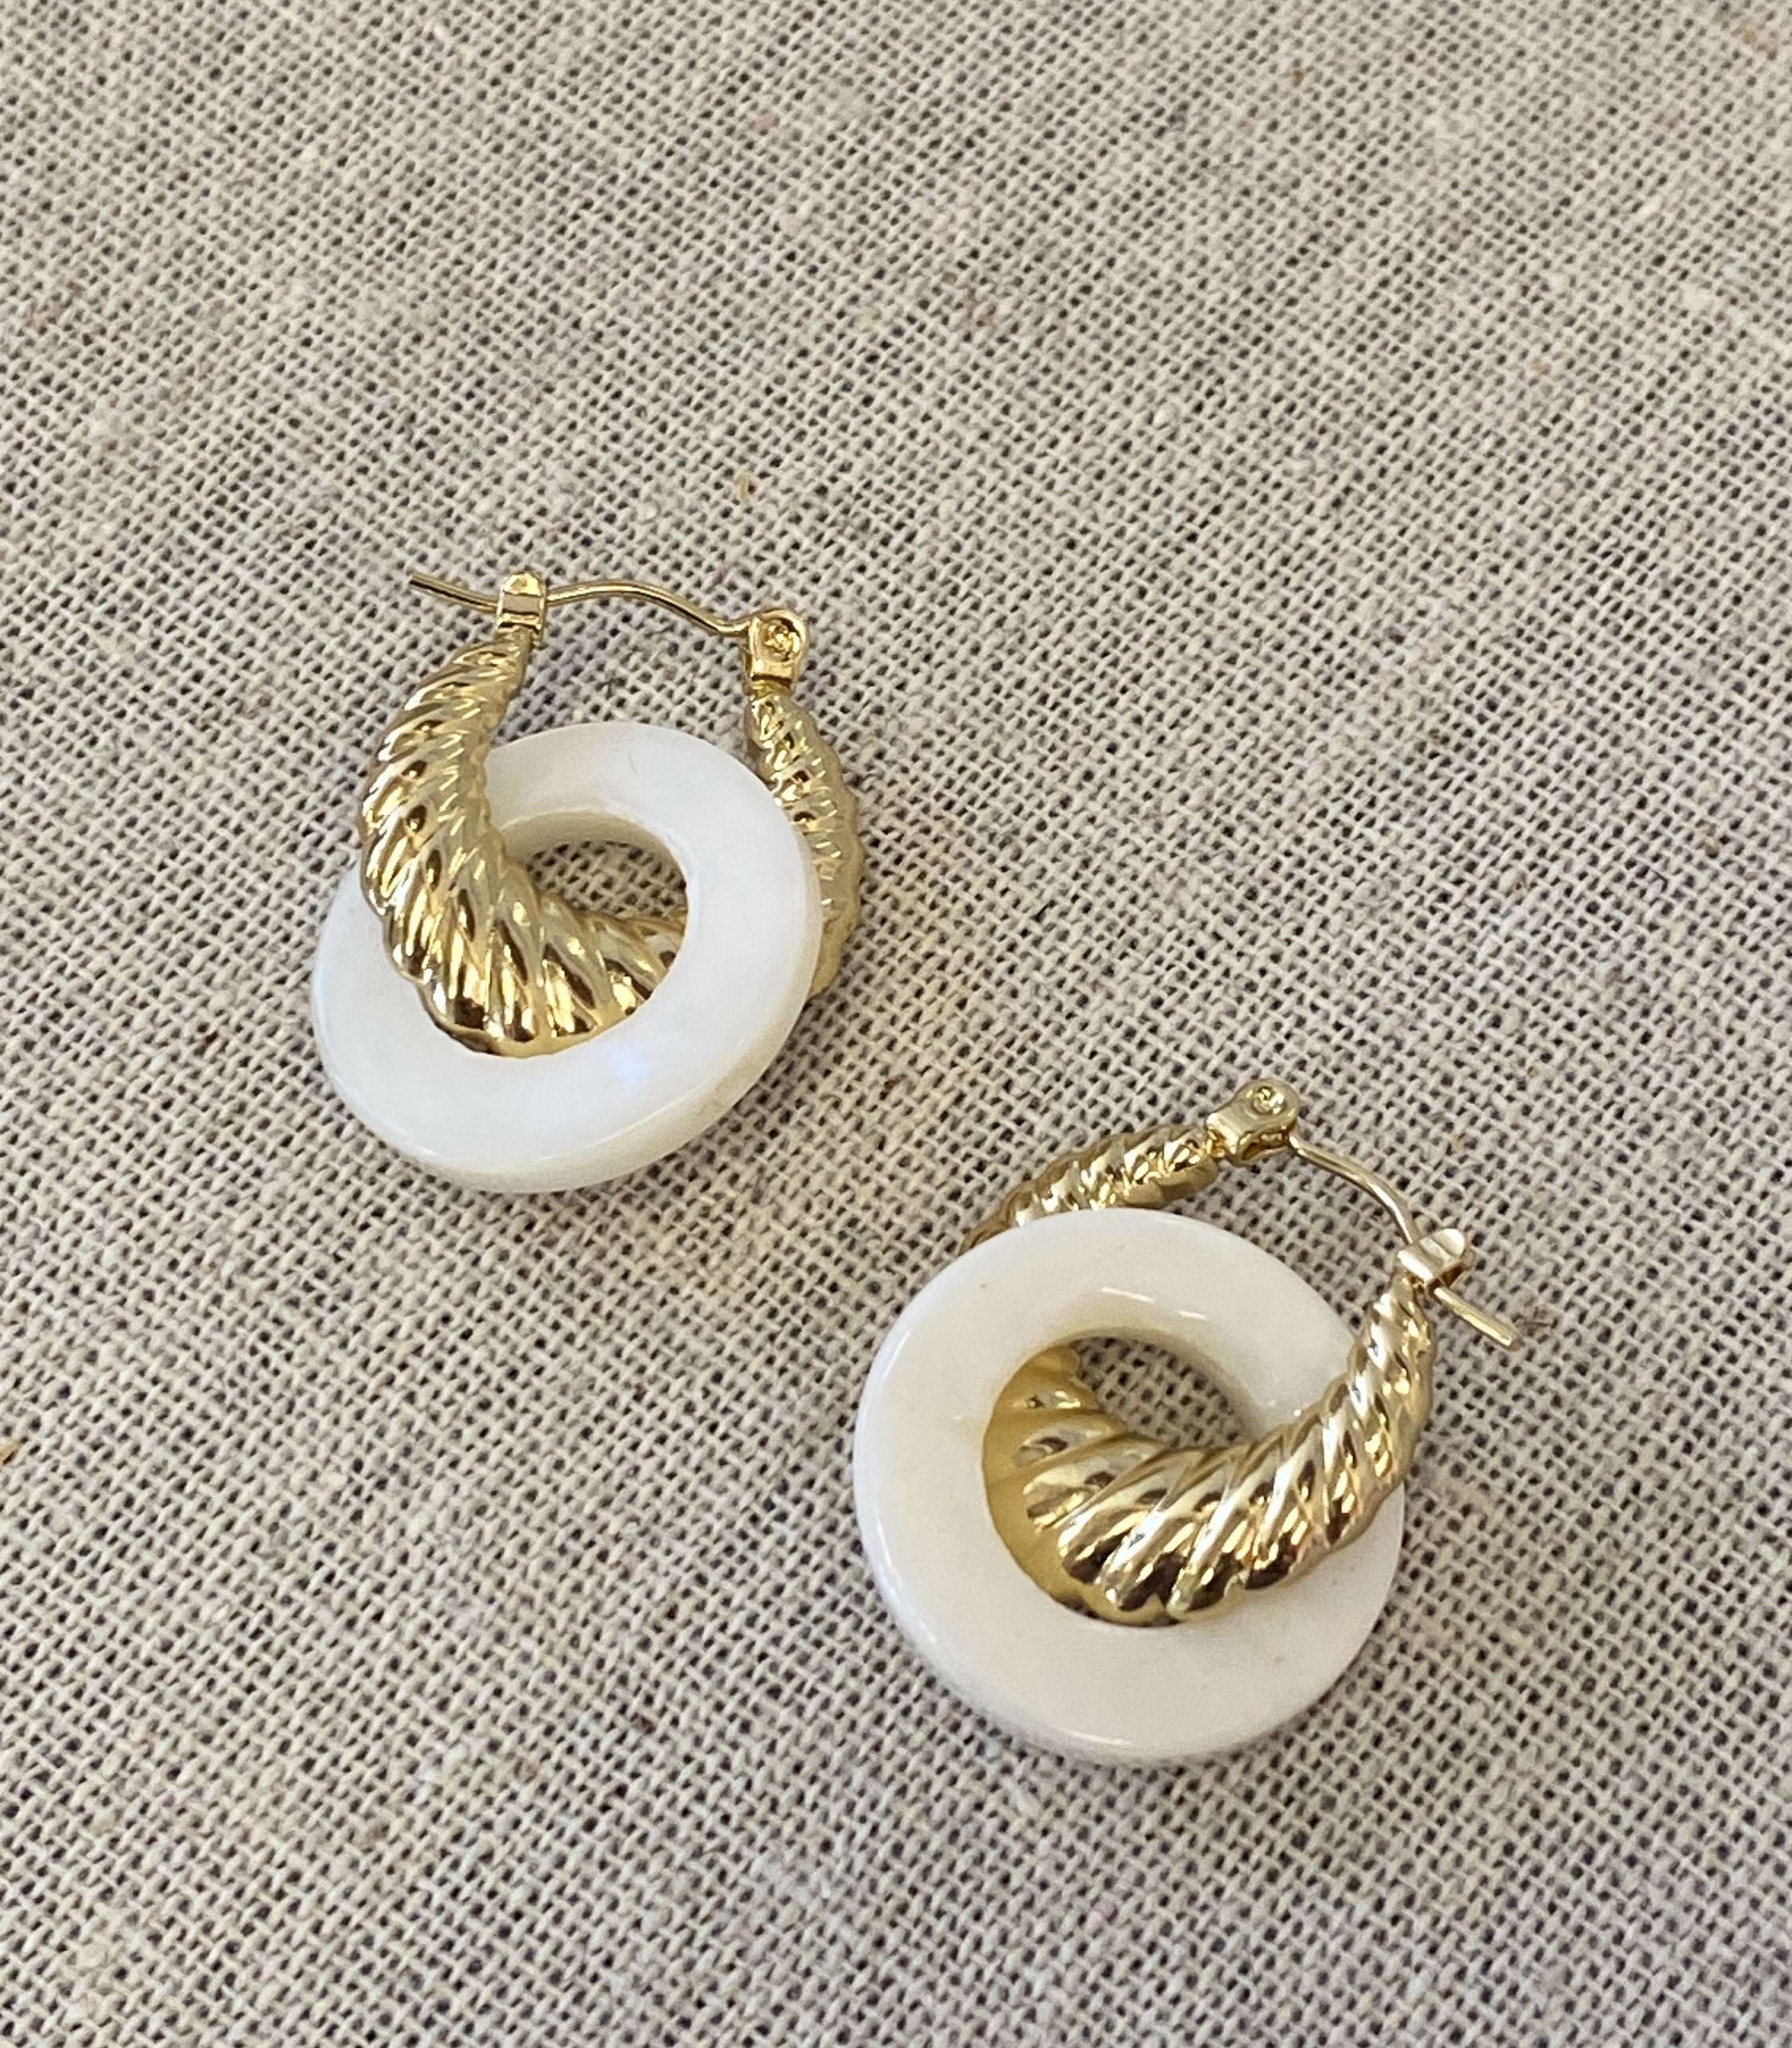 Handmade Brass Spiral Shell Hoop Earrings